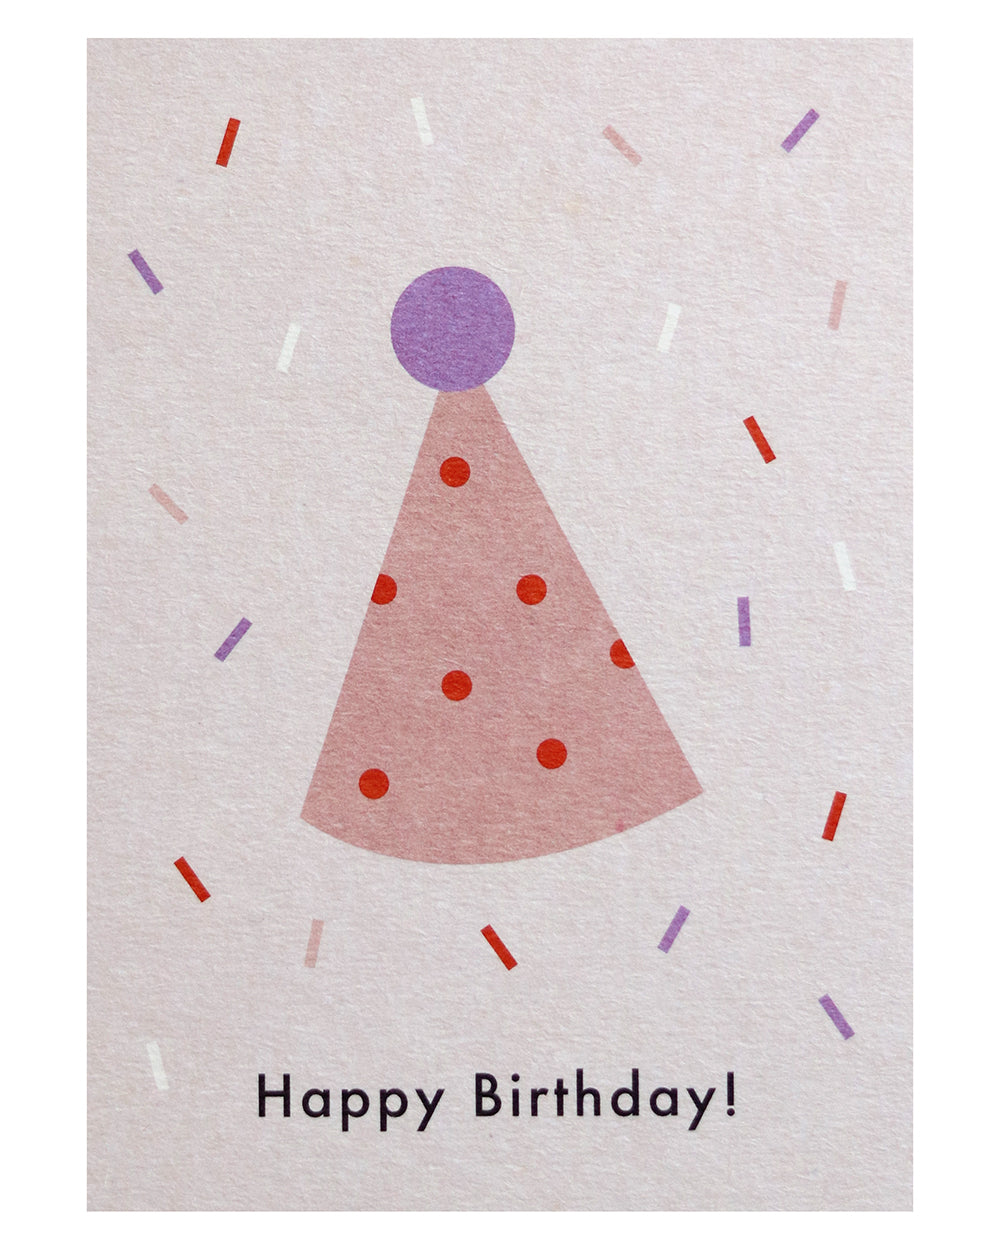 Papier Ahoi - Postkarte "Happy Birthday!" - Konfetti & Partyhut